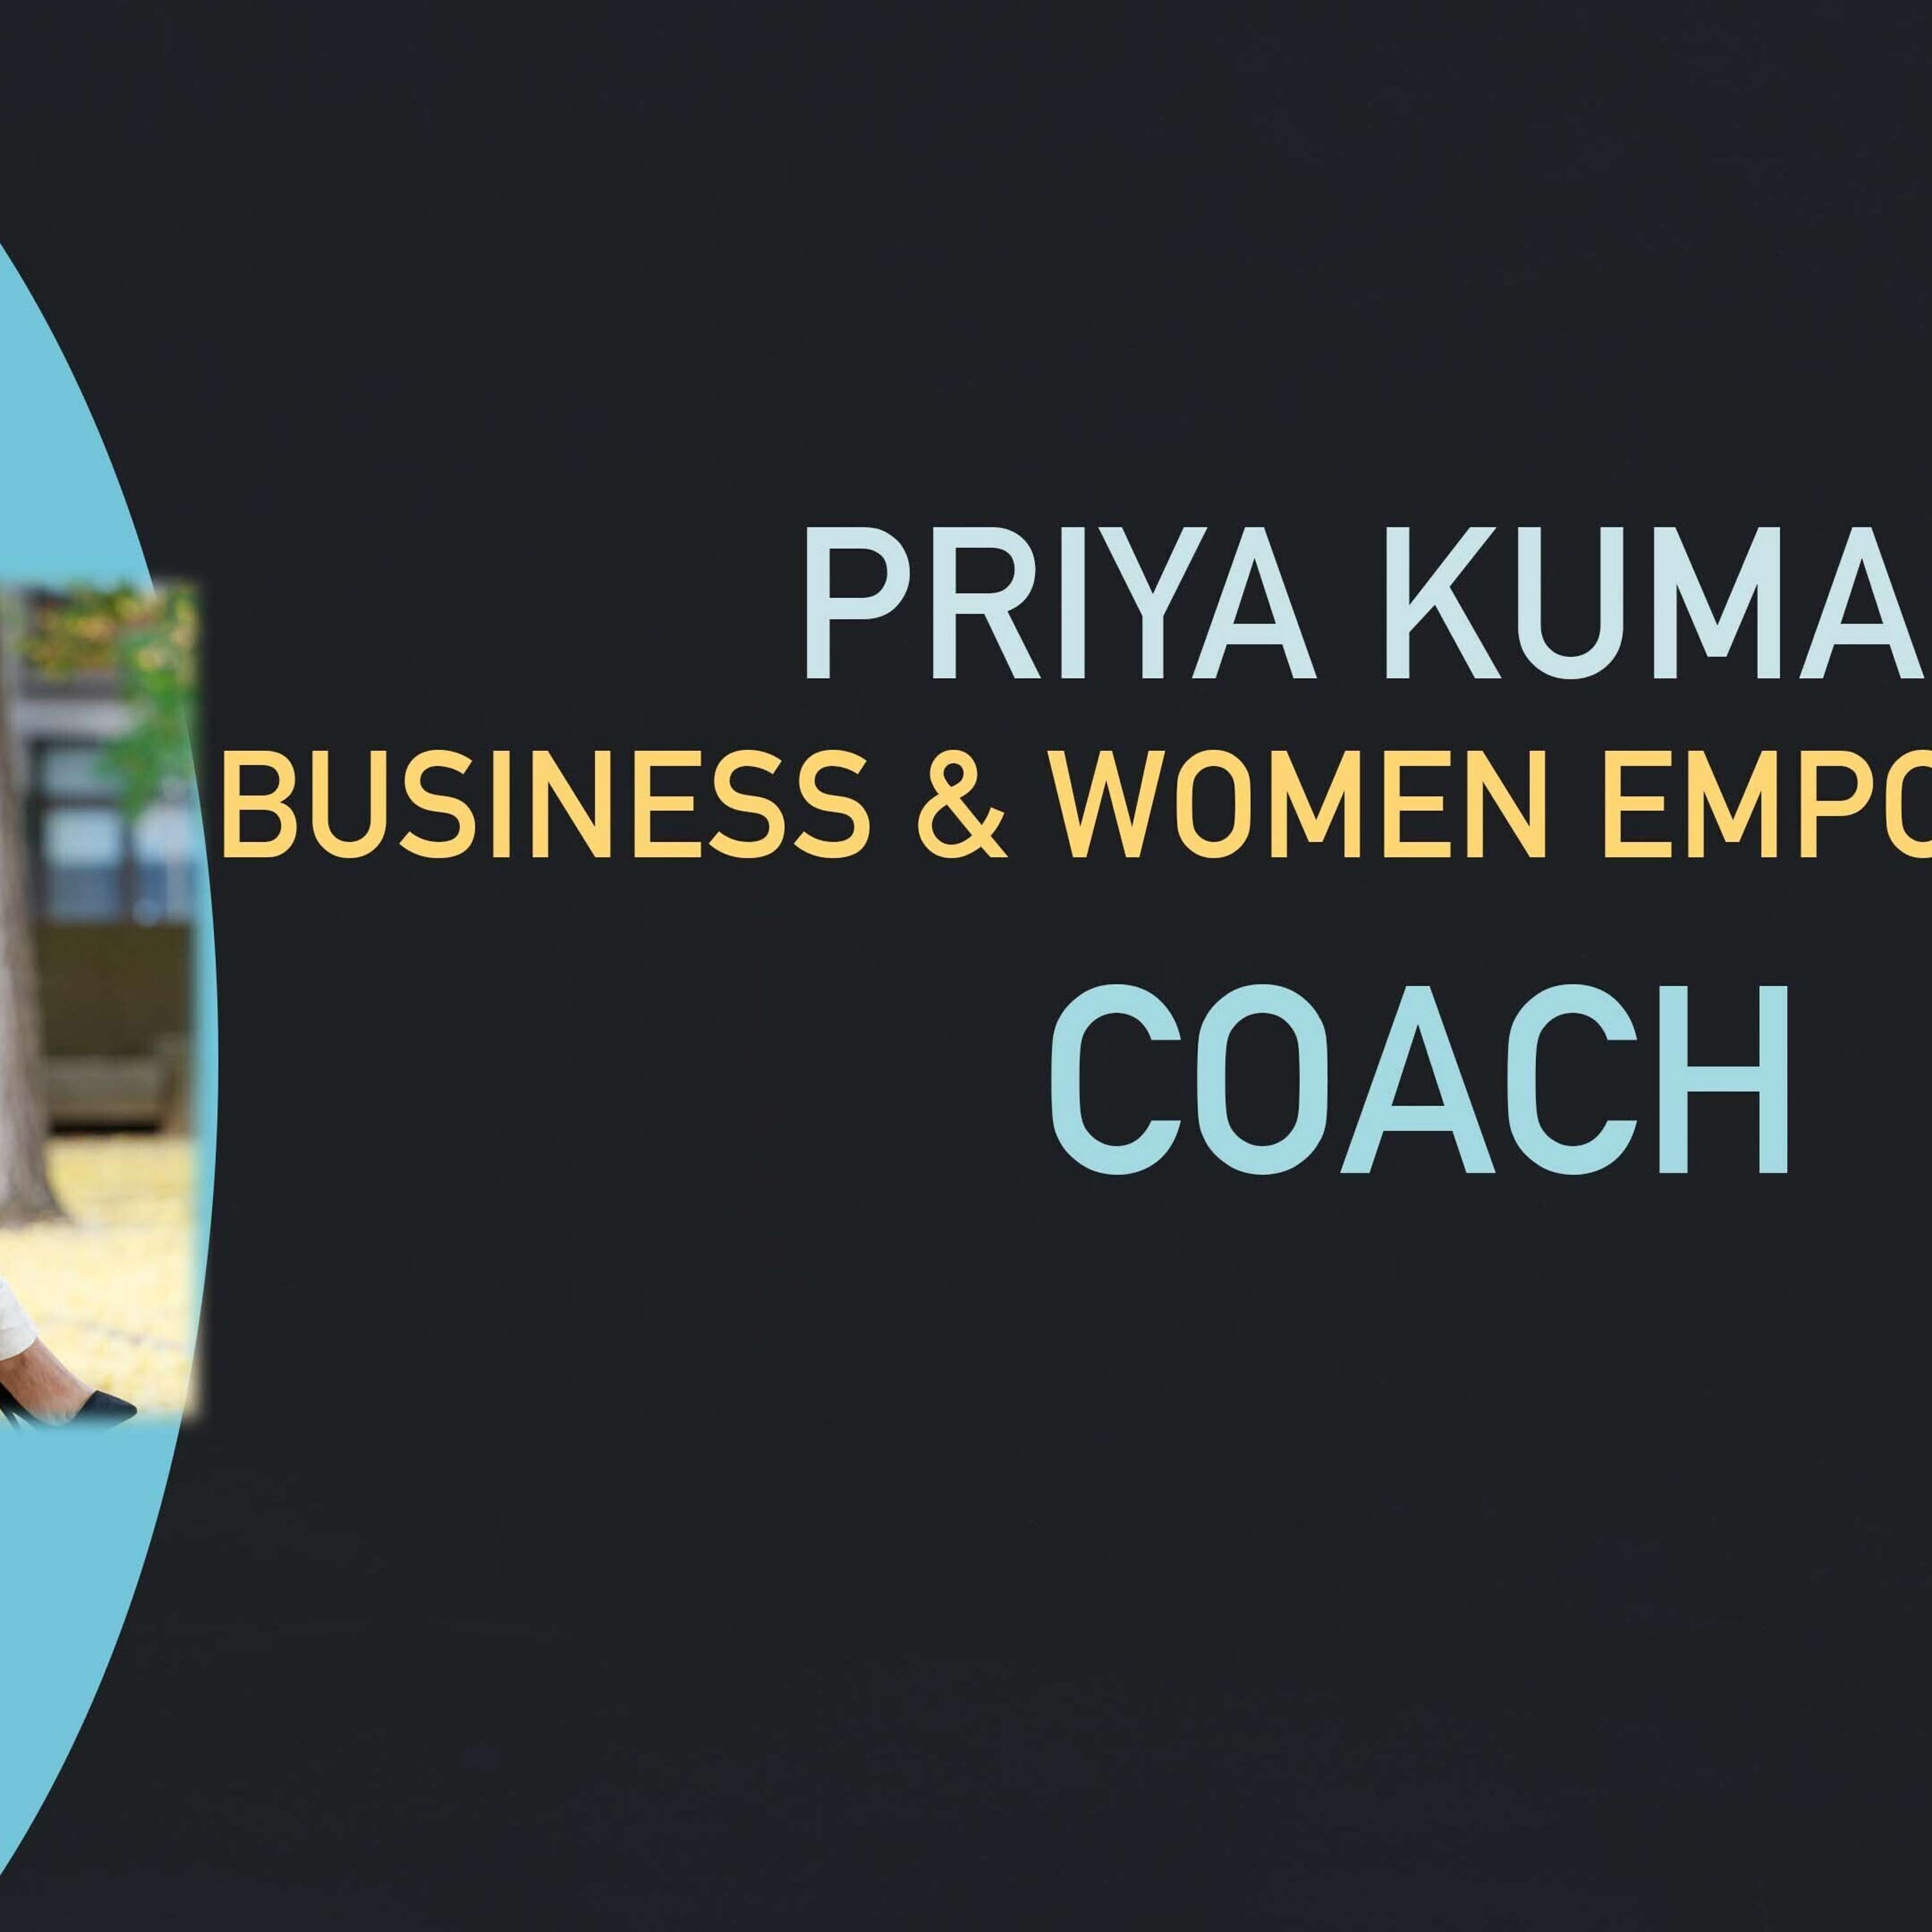 Priya Kumar - Business and Women Empowerment Coach!